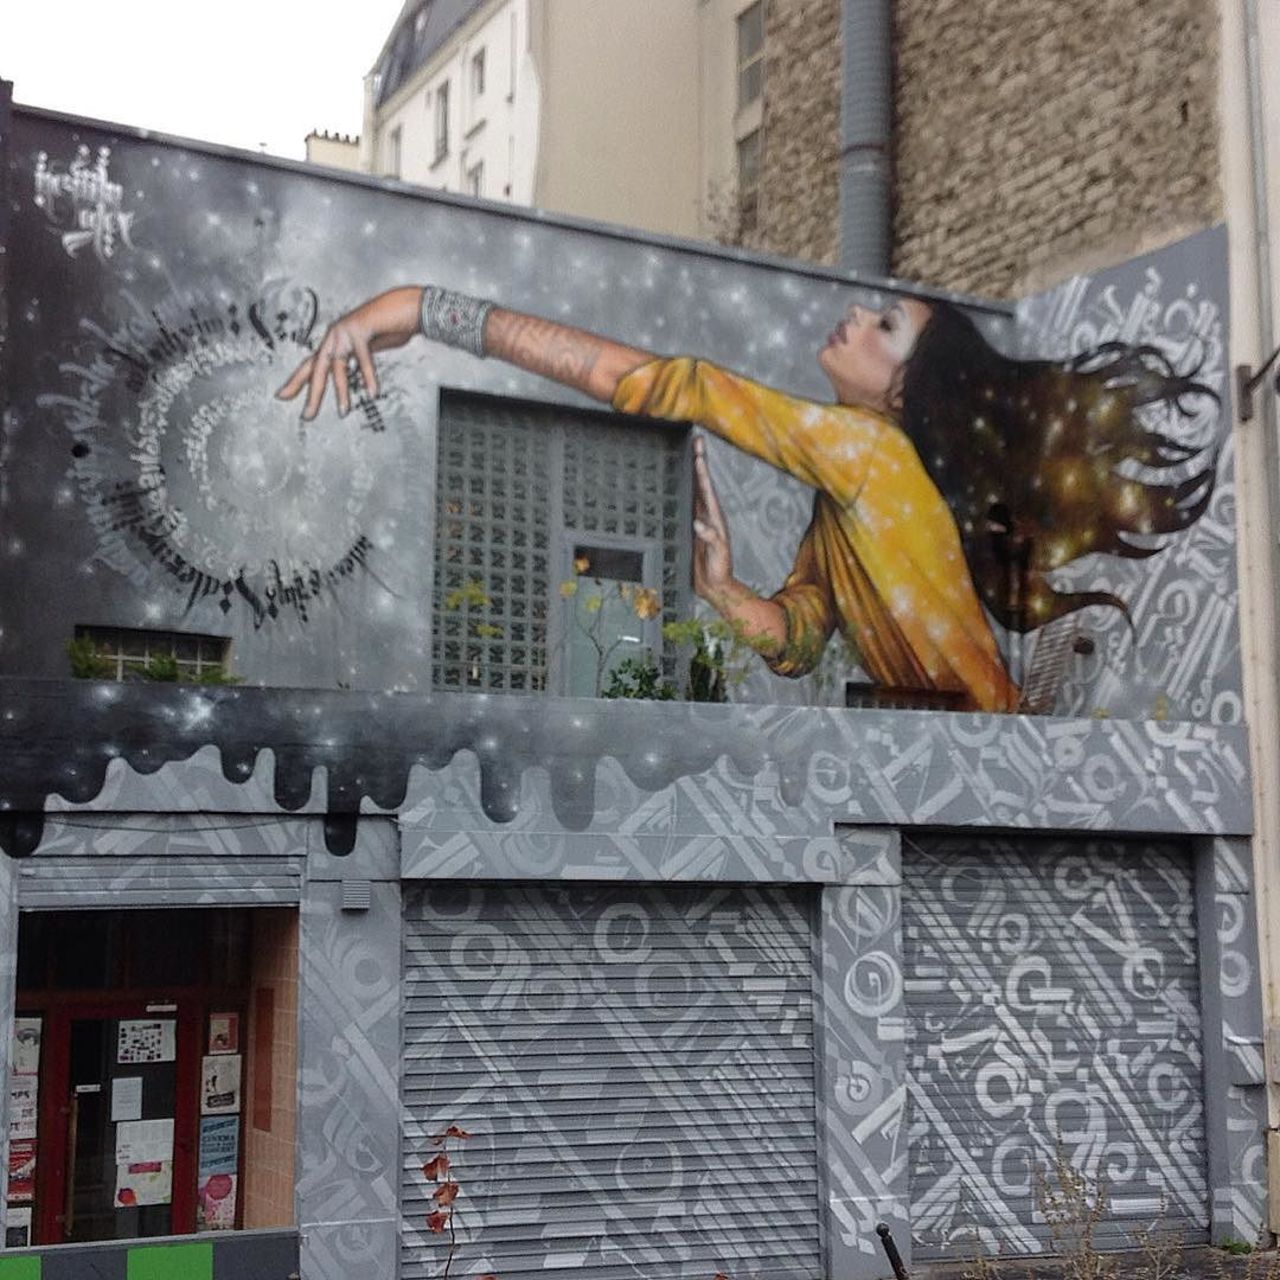 #Paris #graffiti photo by @stefetlinda http://ift.tt/1GuhU6l #StreetArt https://t.co/SejE0TQ423